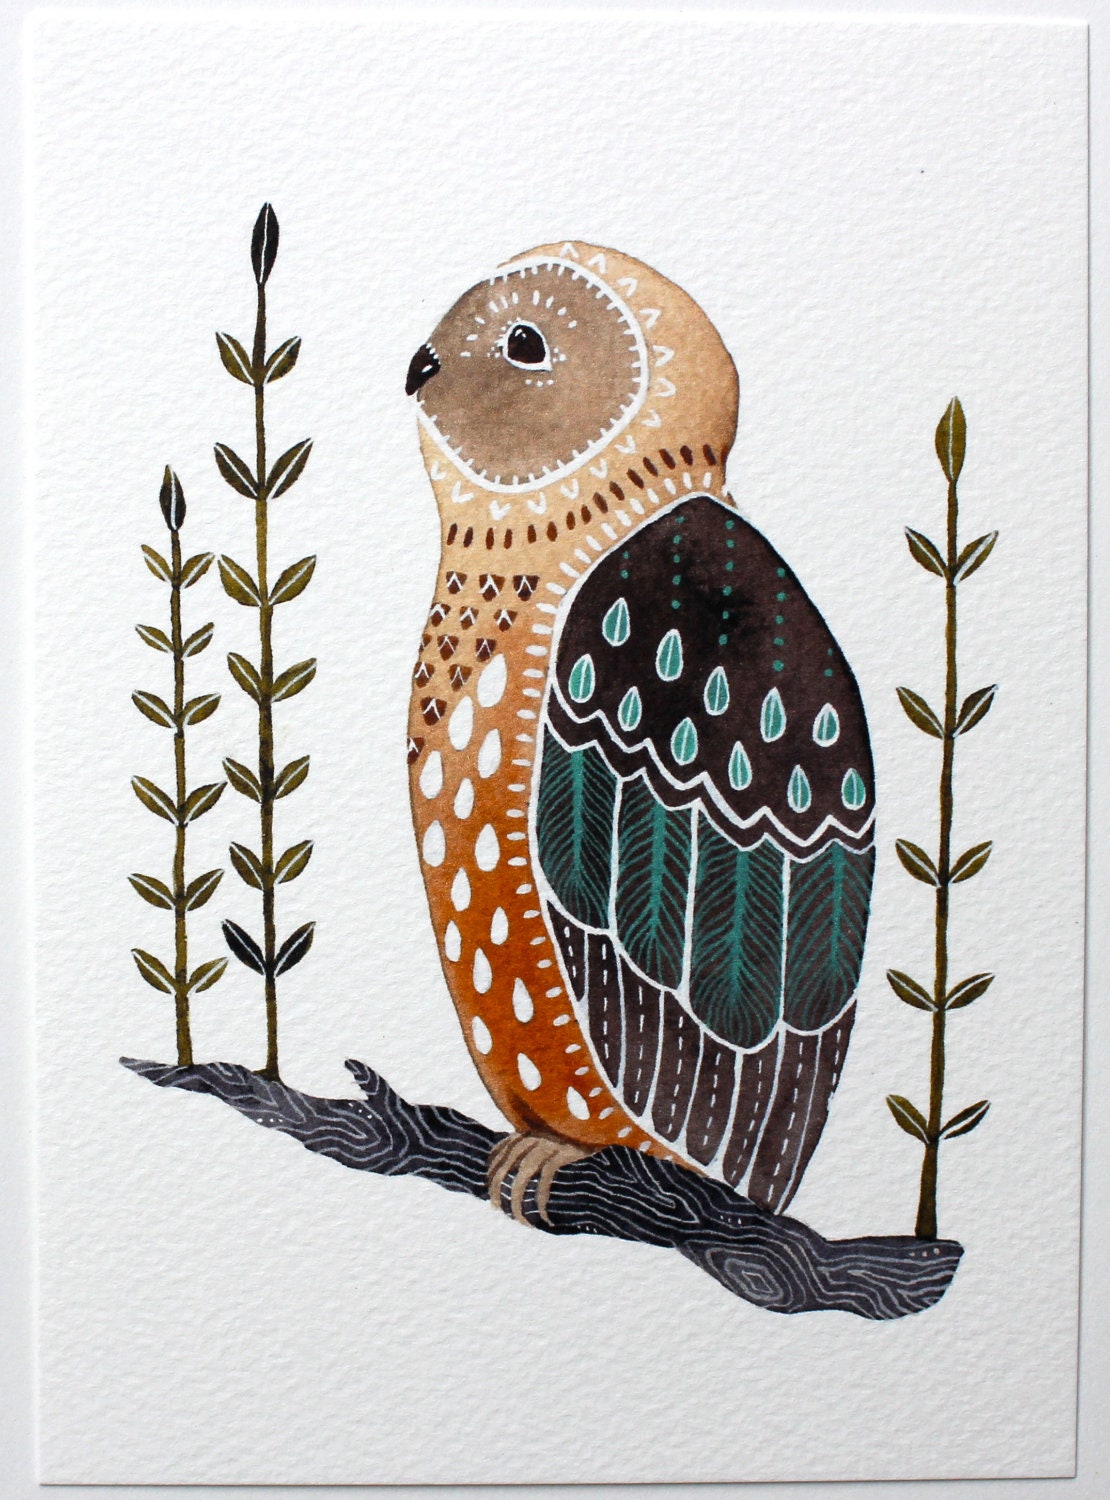 Owl Illustration Art - Watercolor Painting - Archival Print - Little Owl Mosi by Marisa Redondo